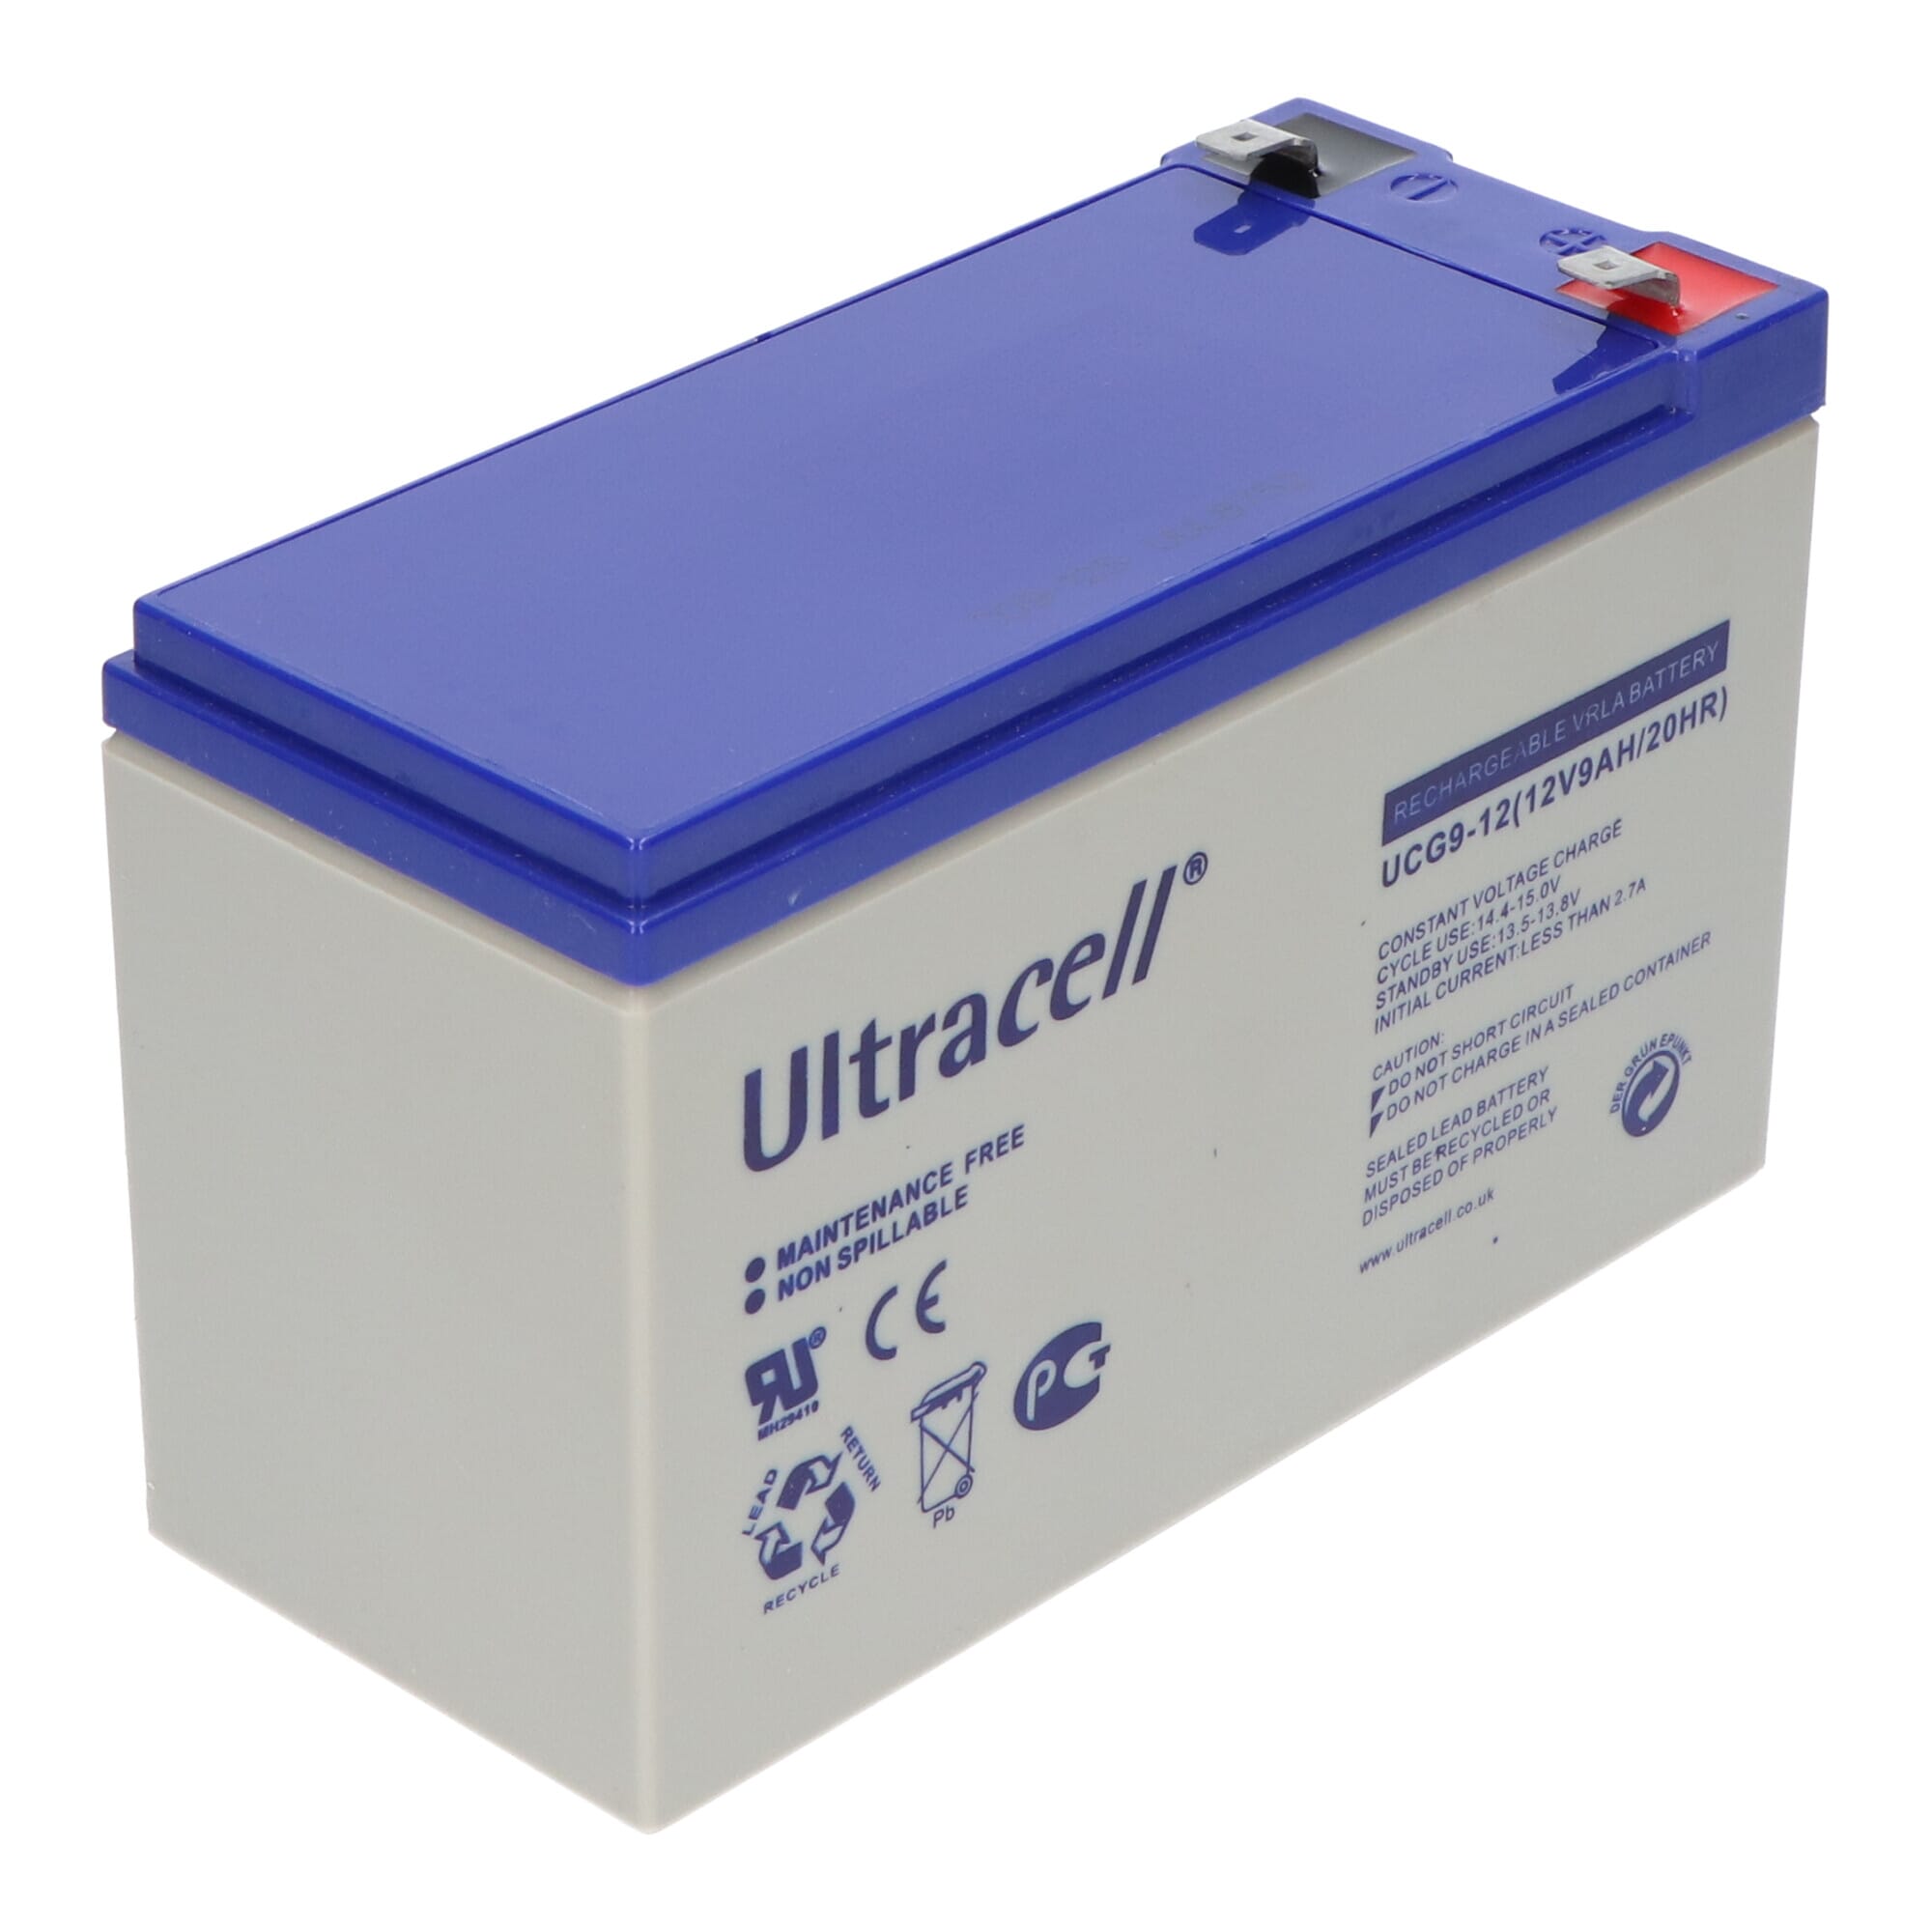 vergaan Samenpersen boeket Ultracell DCGA/Deep Cycle Gel accu UCG 12v 9Ah (UCG9-12) - ReplaceDirect.nl